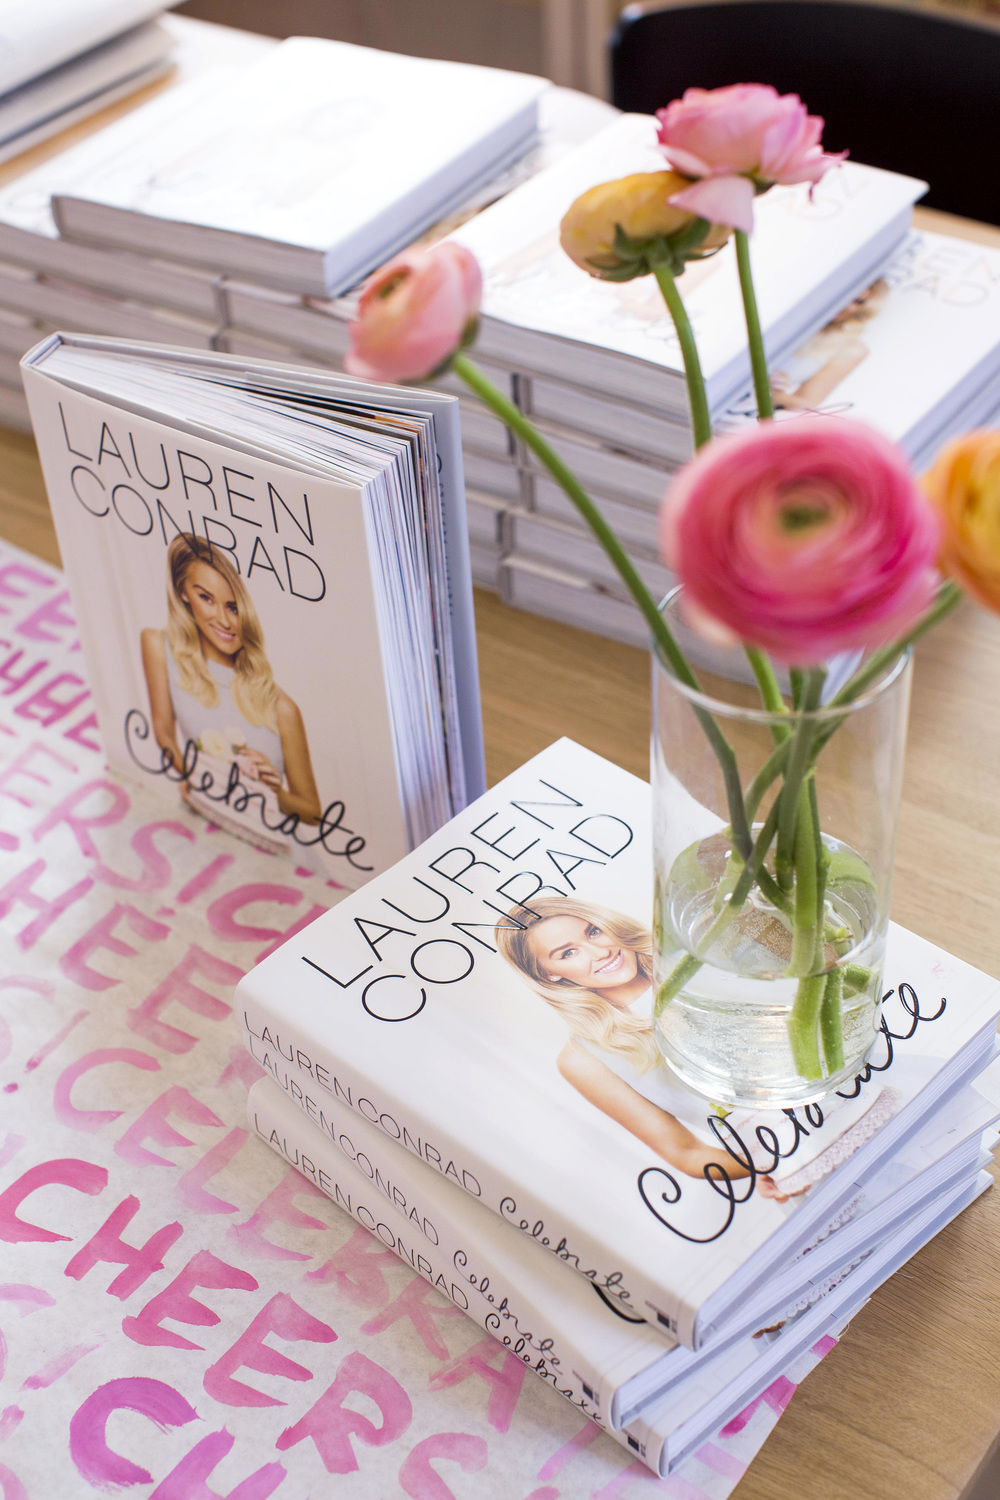 Lauren Conrad Promotes New Book 'Celebrate' in New York City!: Photo  3616373, Lauren Conrad Photos